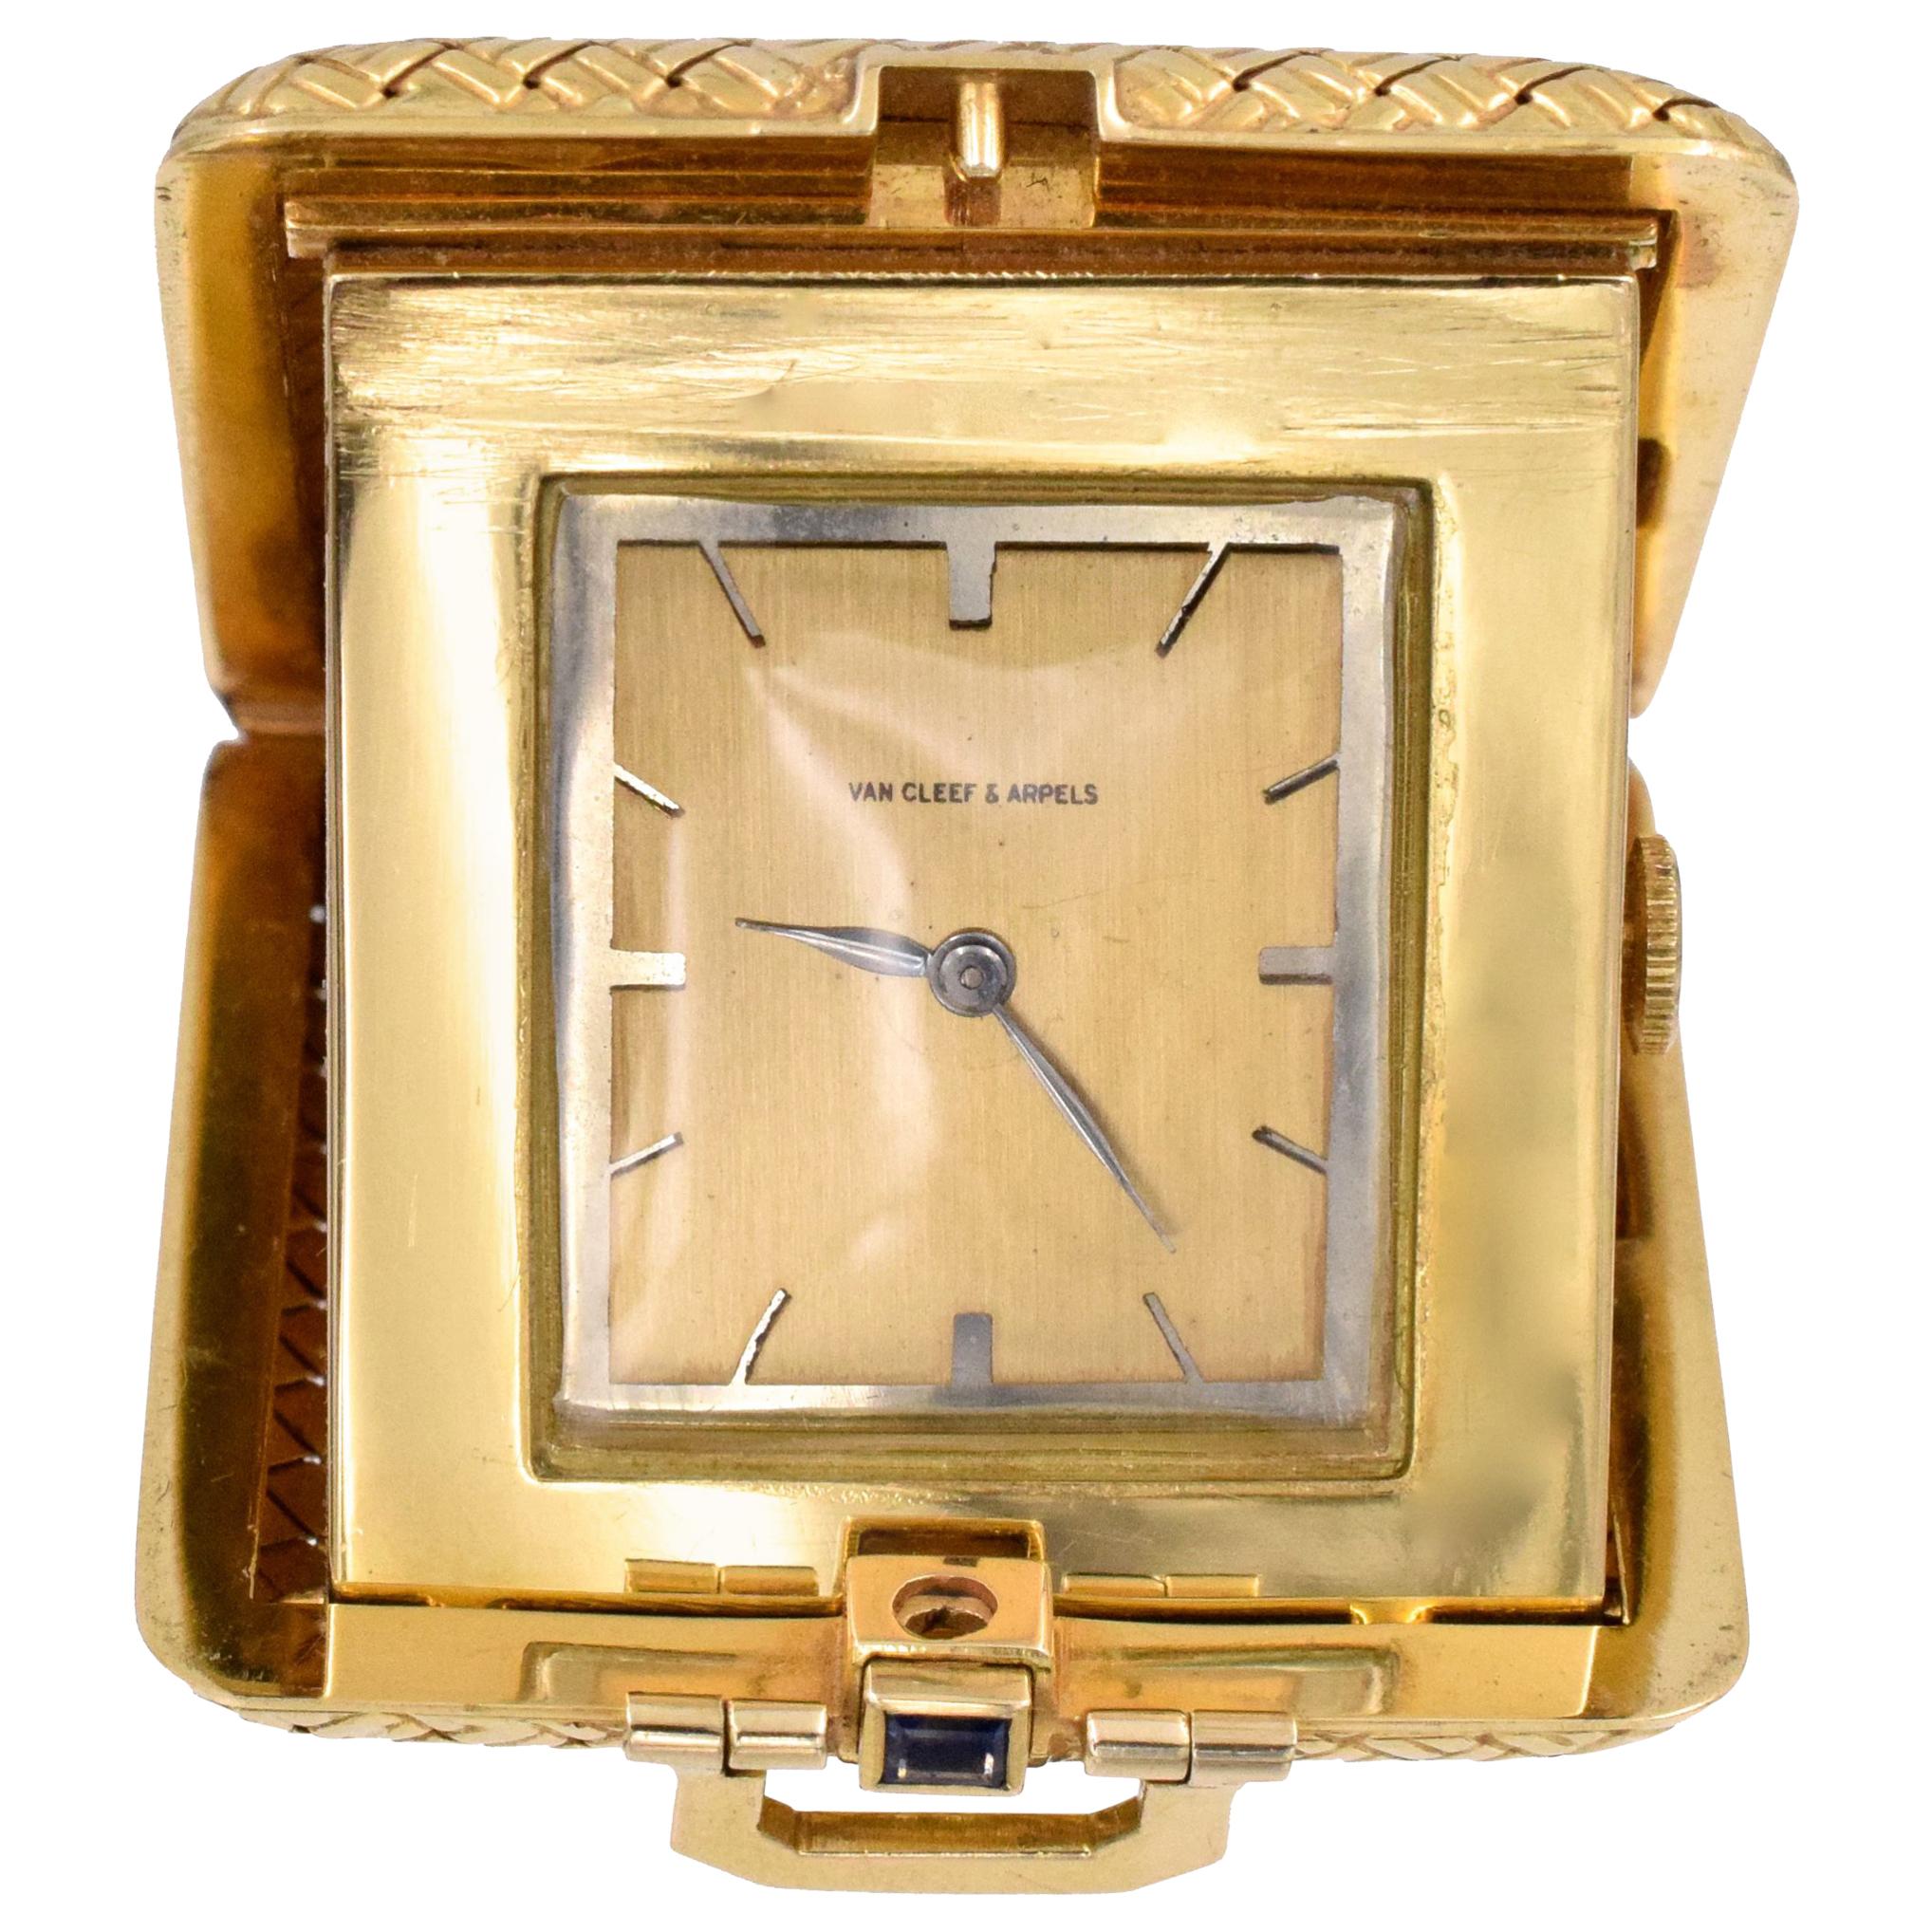 Van Cleef & Arpels Travel Clock For Sale